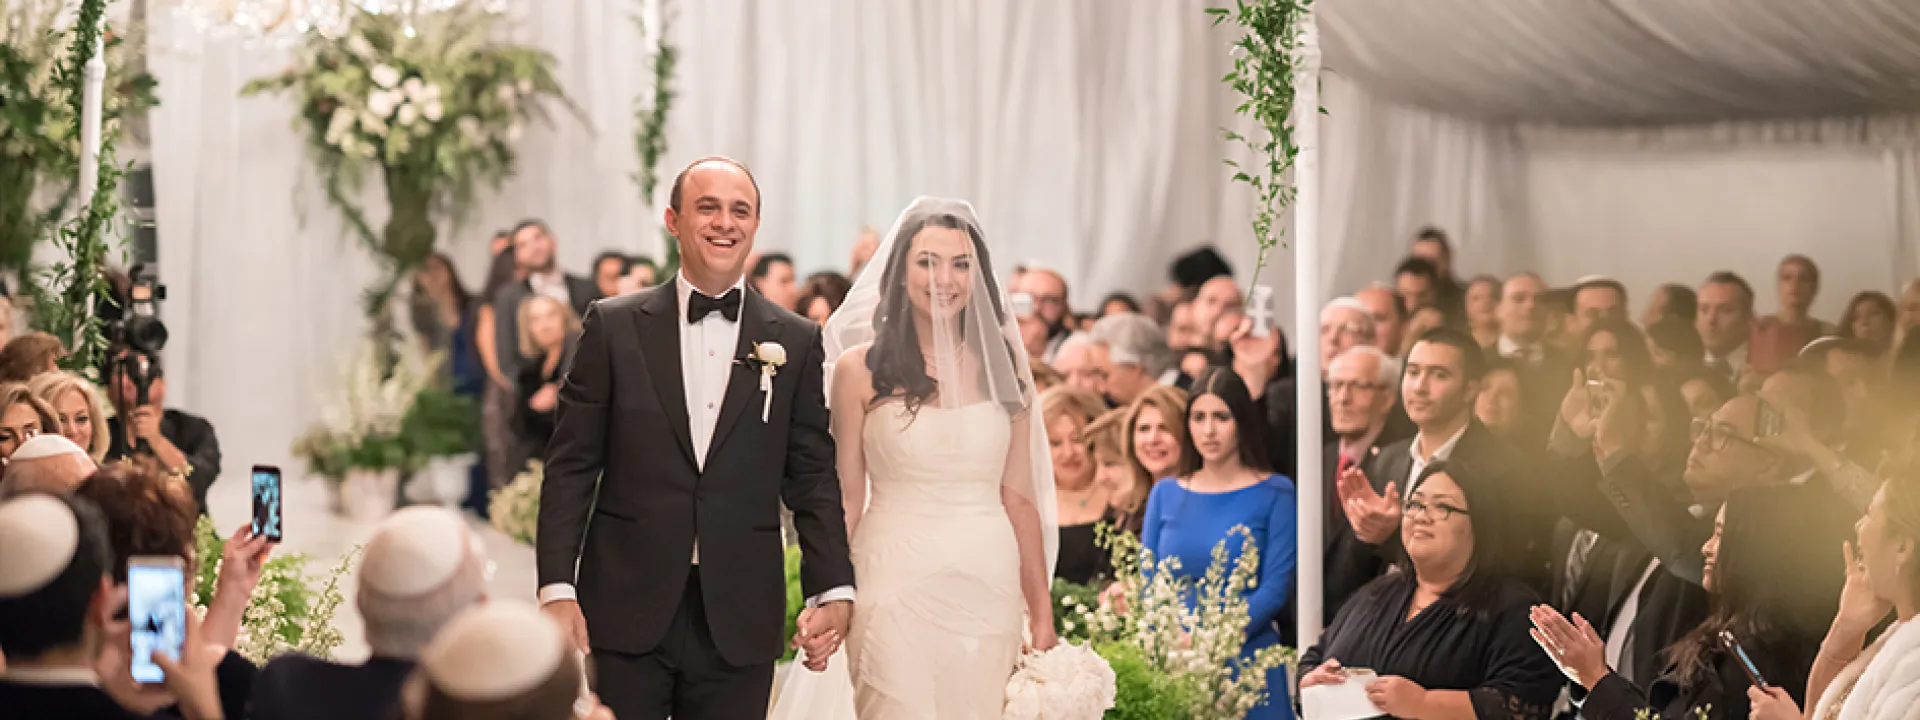 Michael and Neda walk down the aisle at their wedding at Four Seasons Westlake Village wedding.